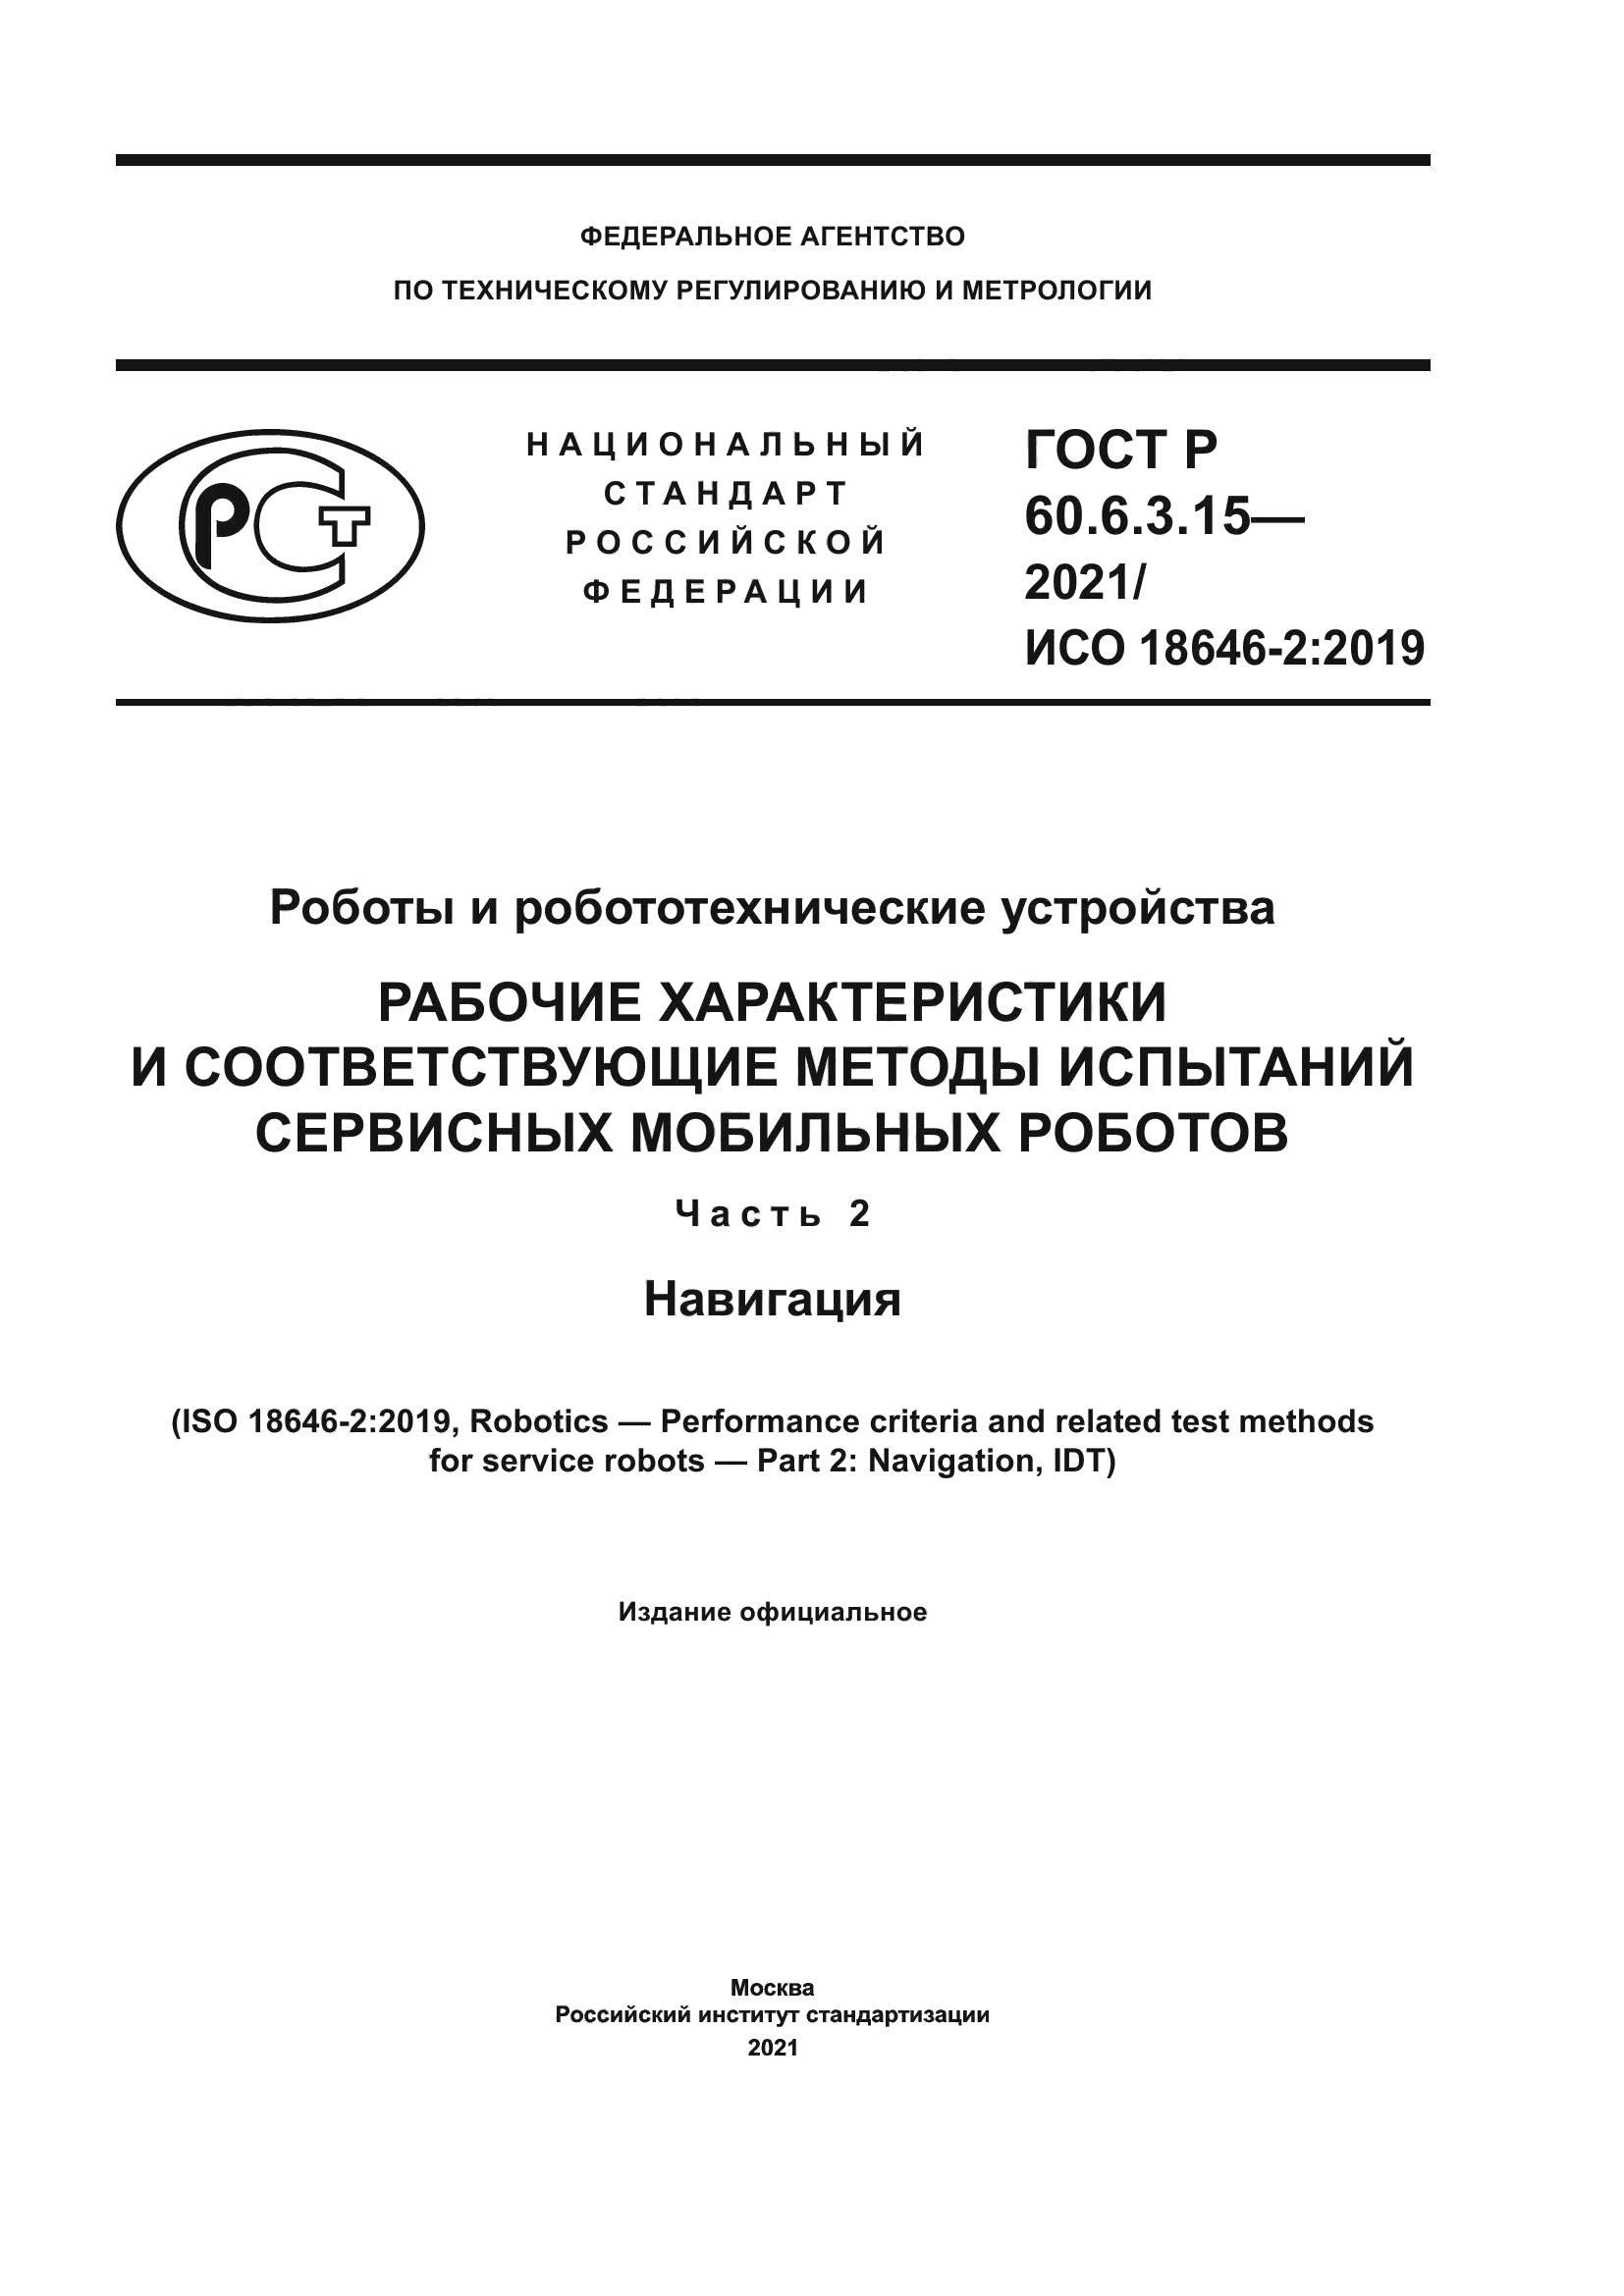 ГОСТ Р 60.6.3.15-2021